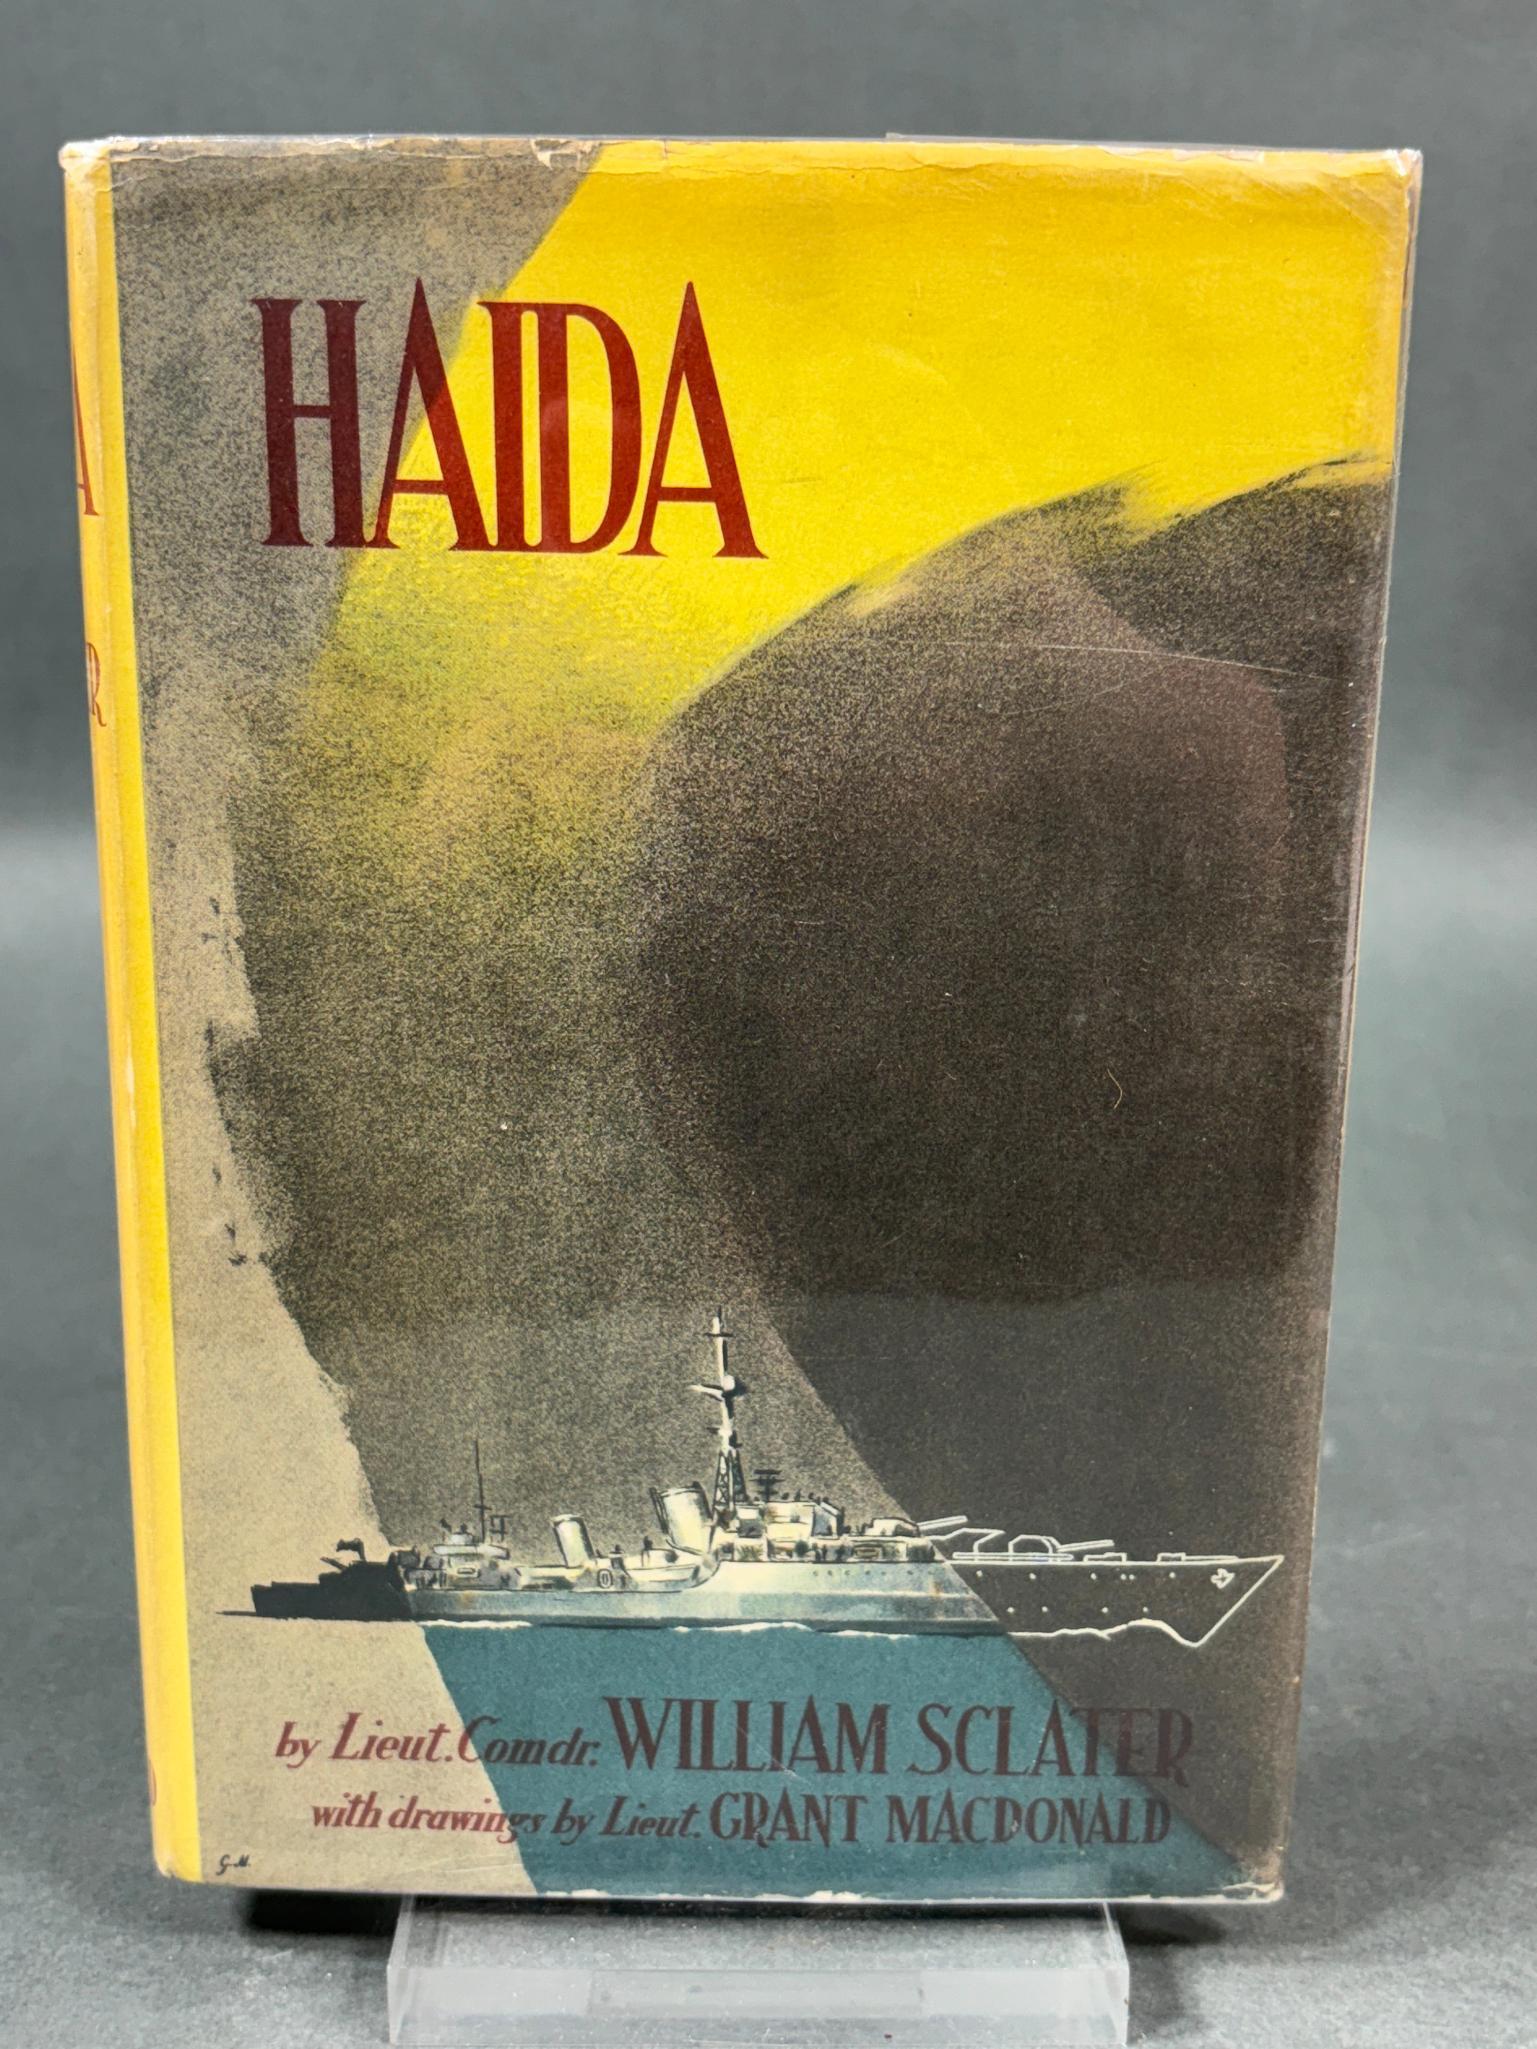 WWII ROYAL CANADIAN NAVY RATINGS CAP HCMS HAIDA & 1ST EDITION BOOK "HAIDA" PUBLISHED 1946